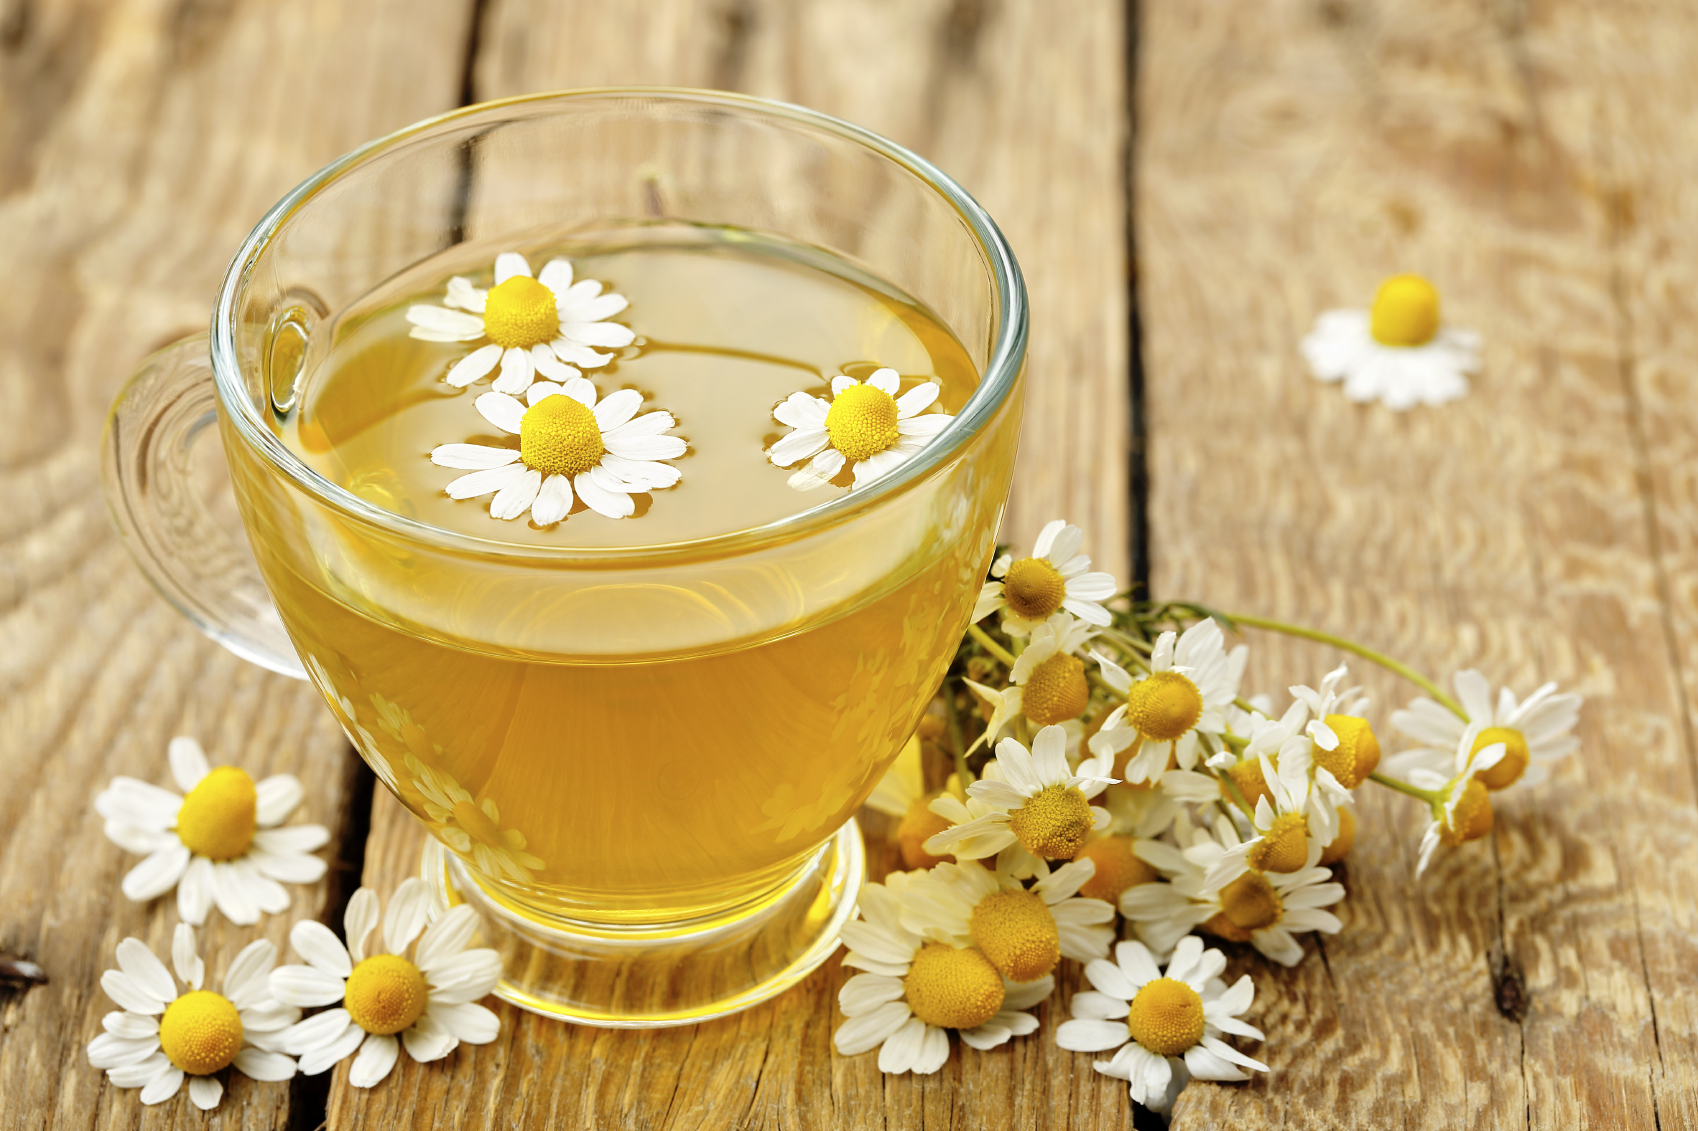 chamomile tea benefits For Hair and Health